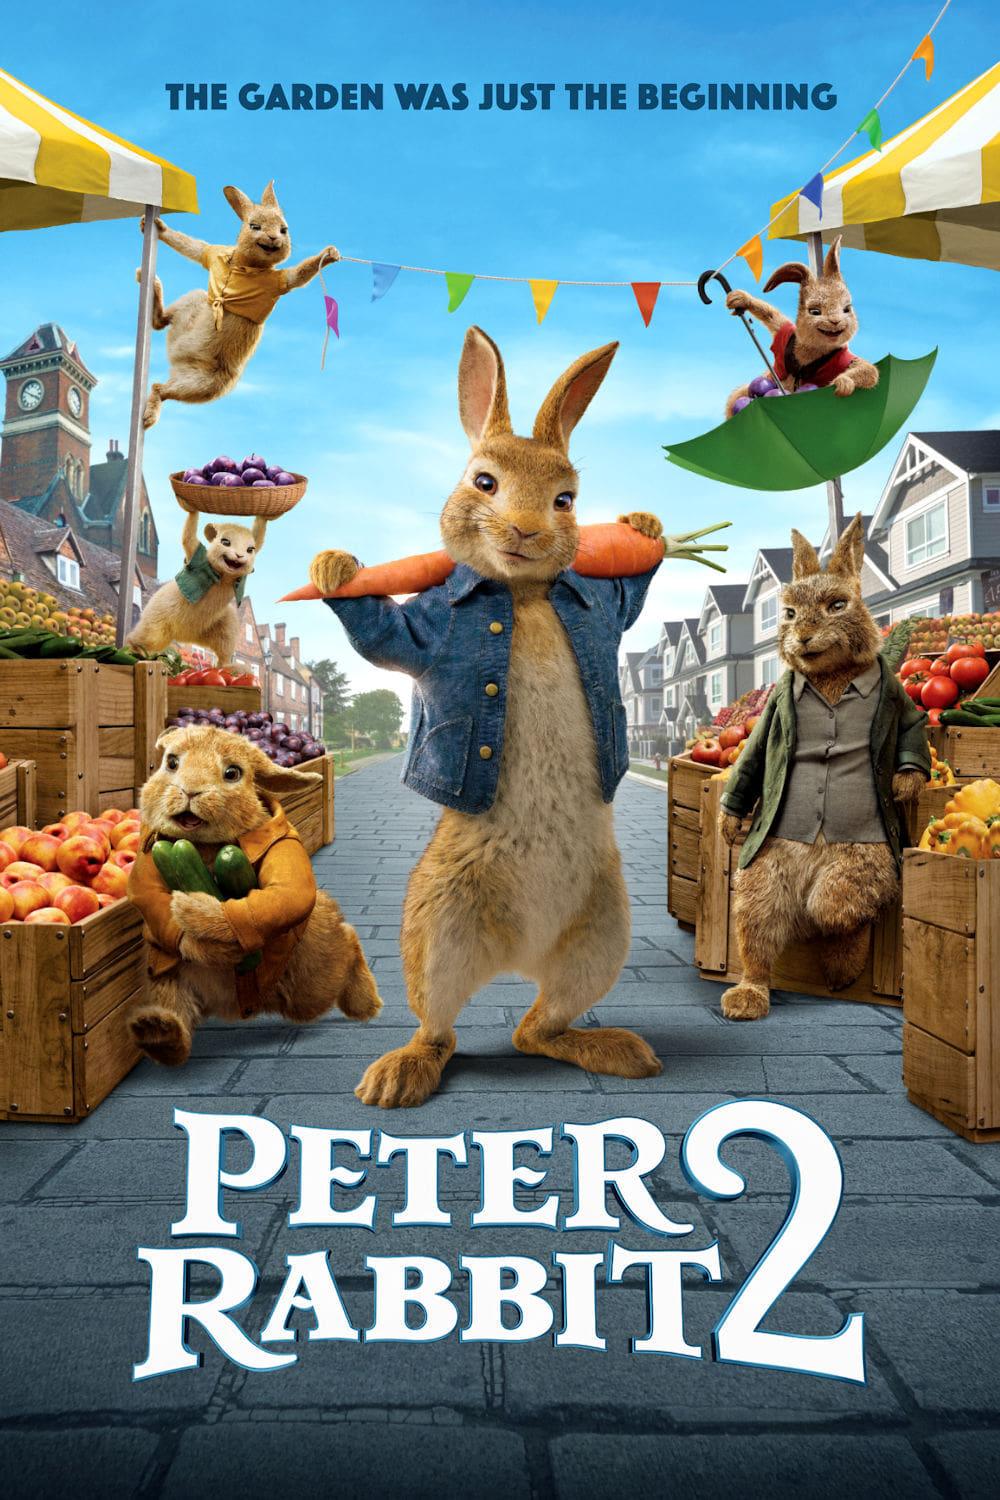 Peter Rabbit 2: The Runaway poster